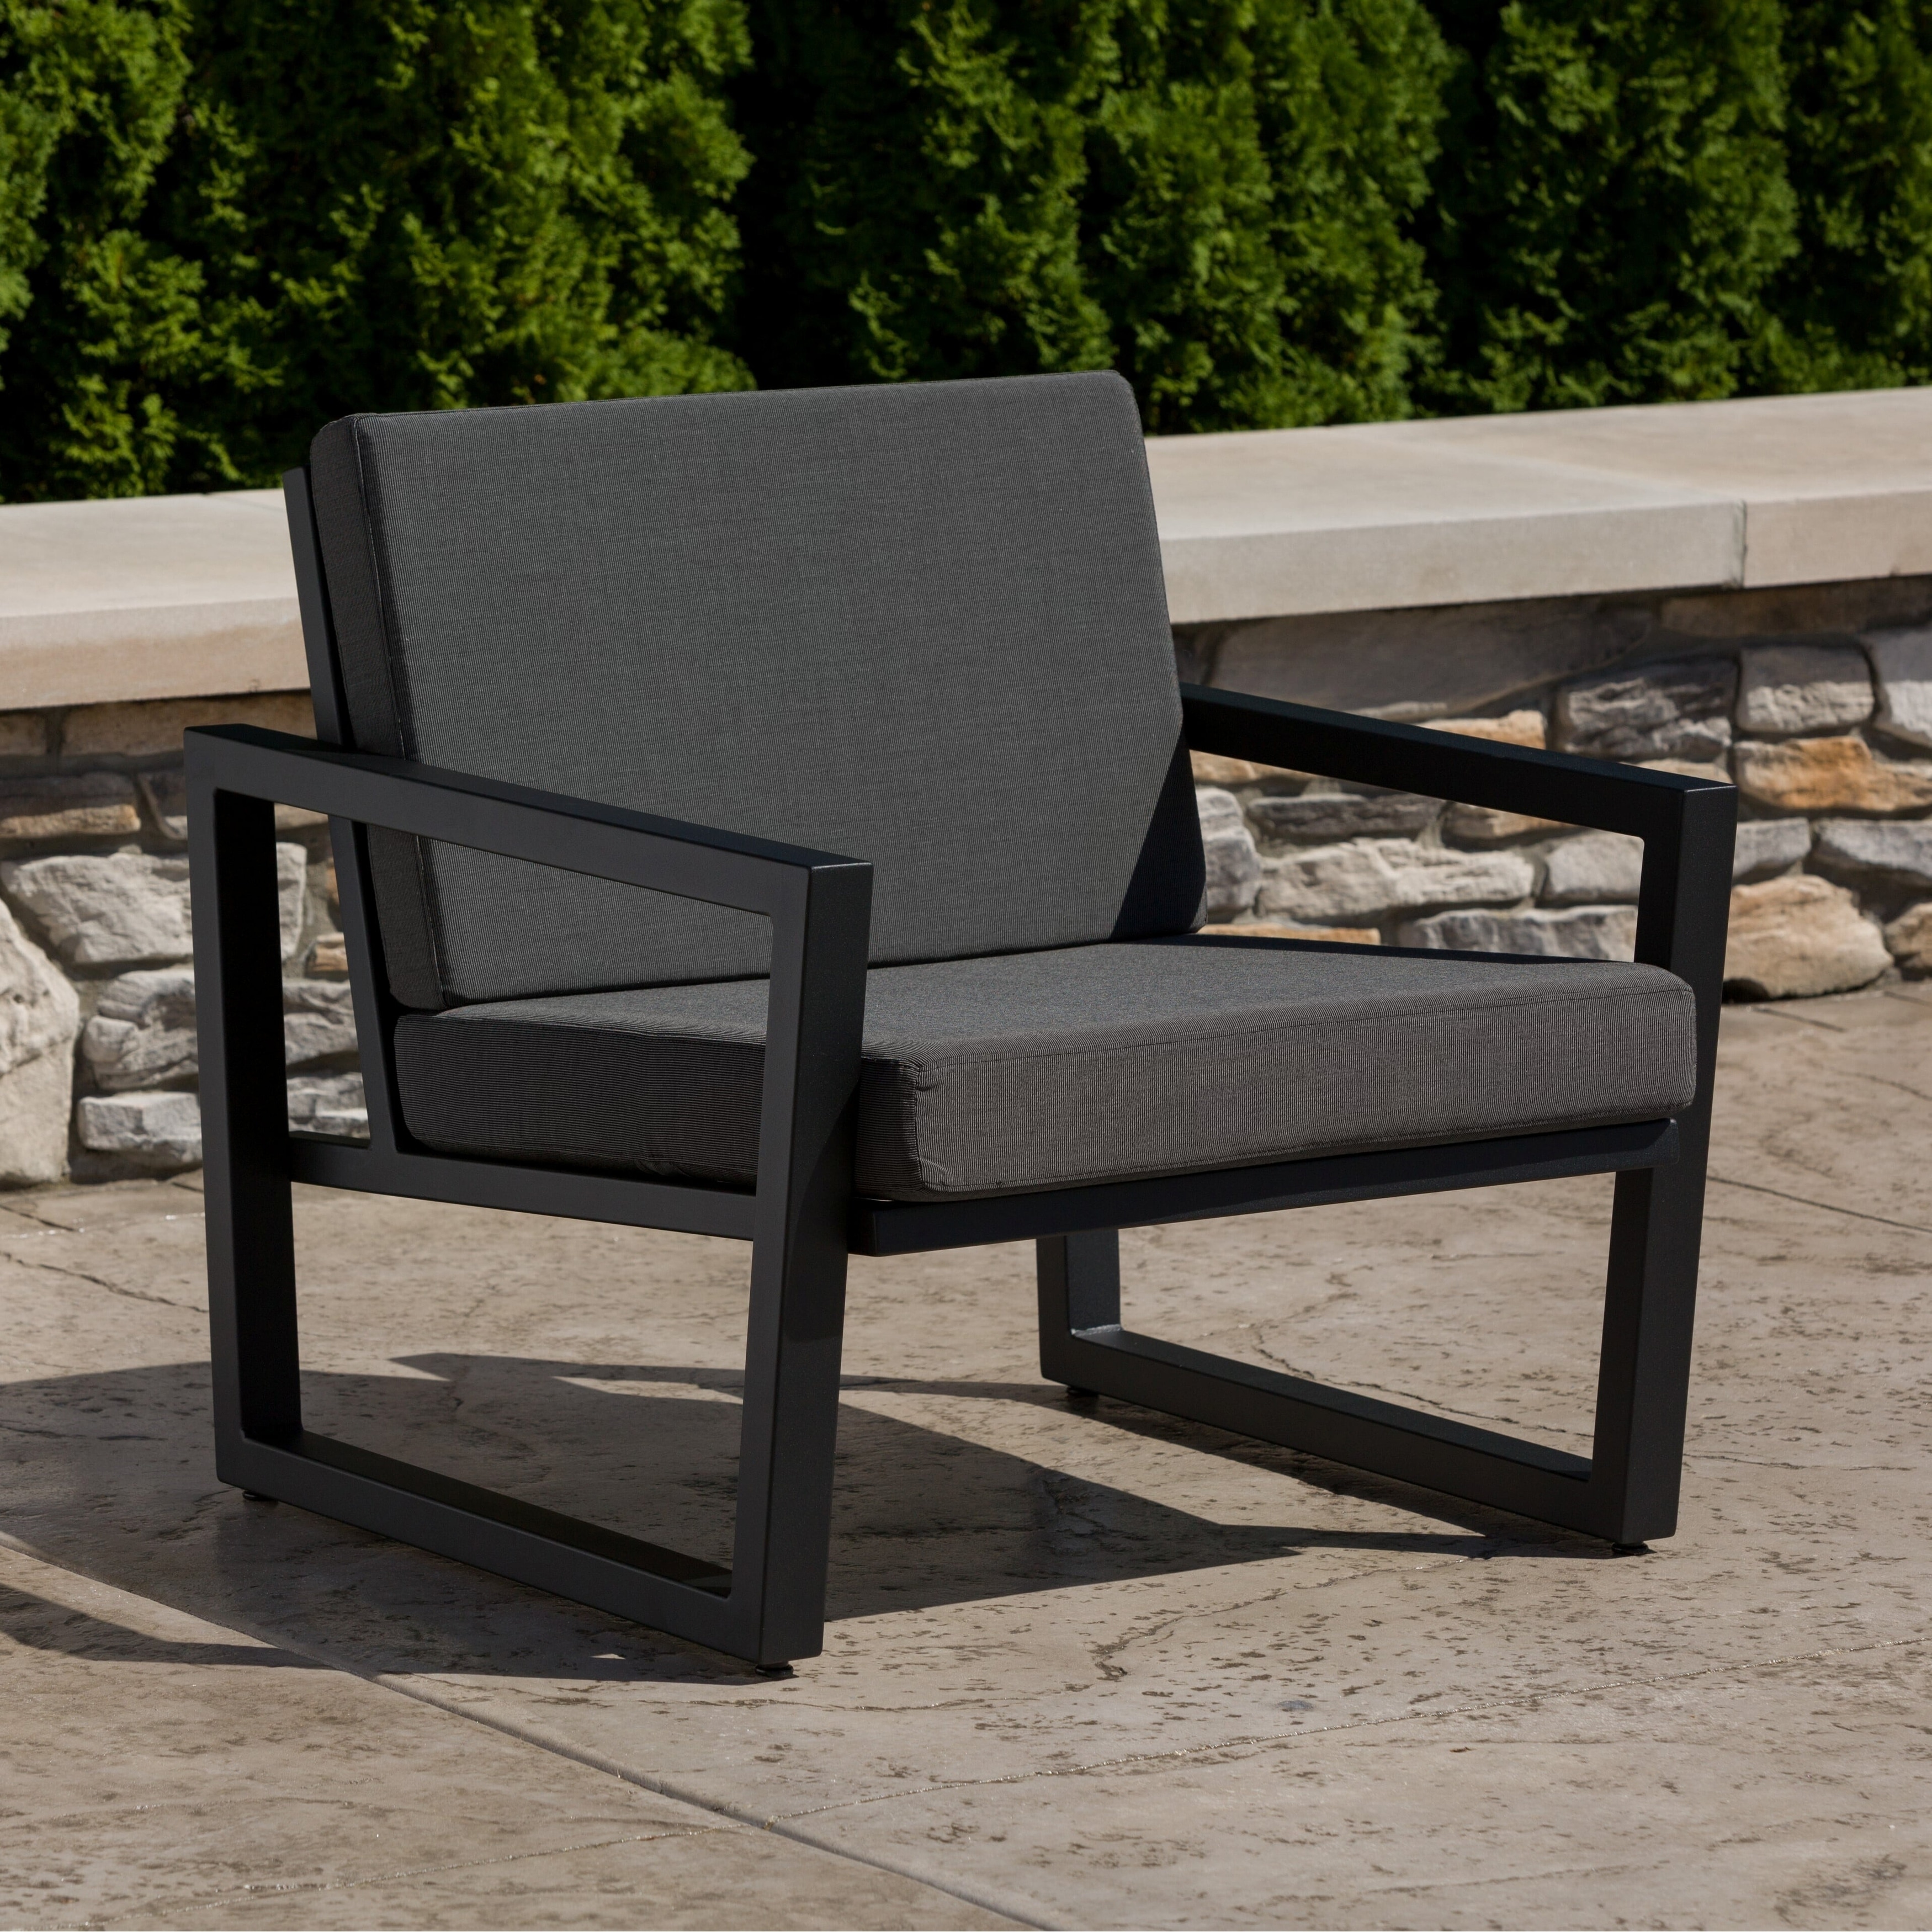 Elan Furniture Vero Outdoor 3 Piece Chat Set - Coal Sunbrella Cushions